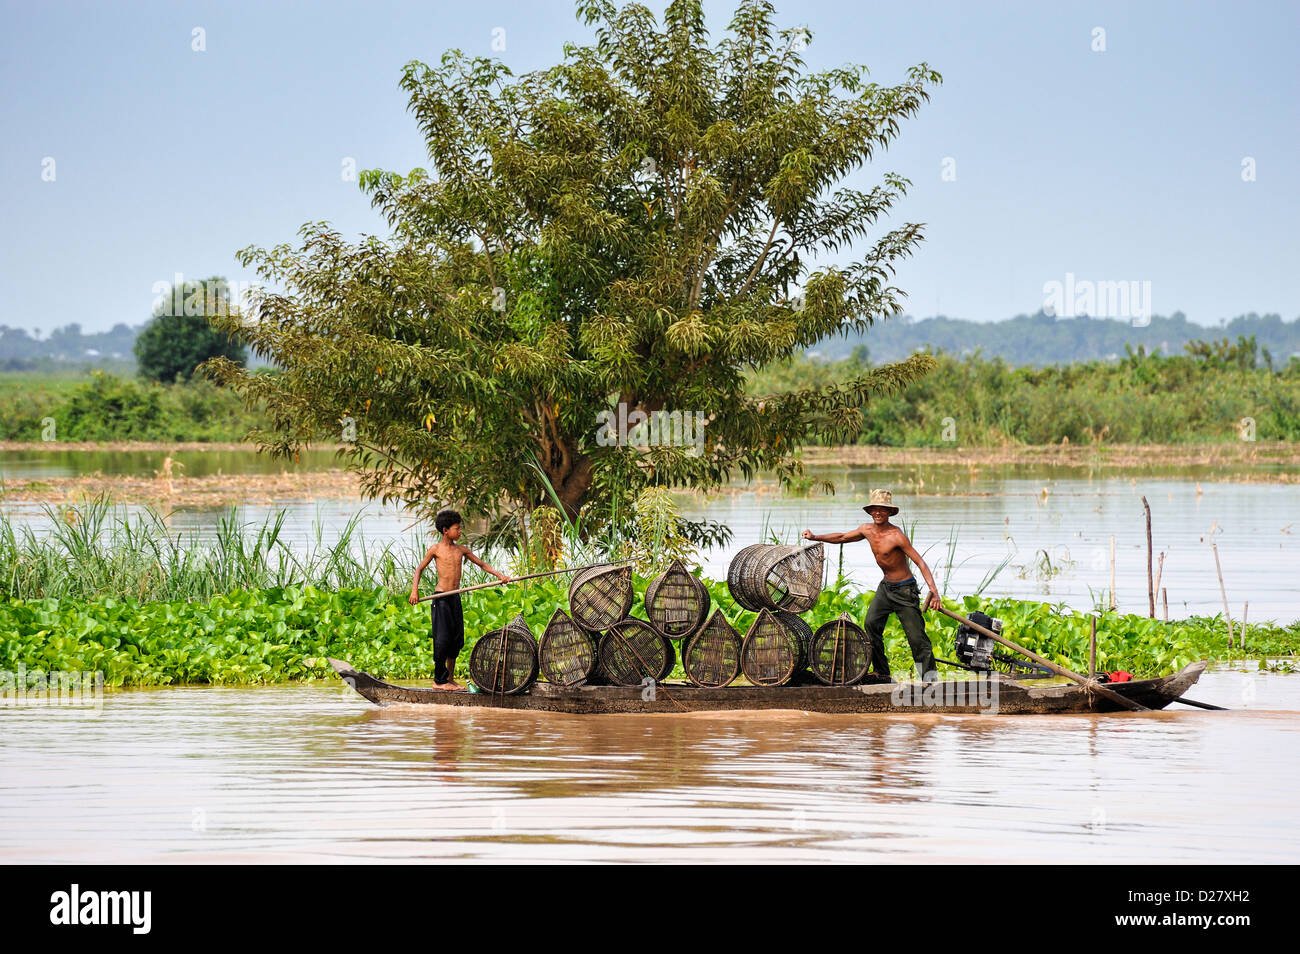 Mekong River, Cambodia - man and boy transporting fishing traps / baskets Stock Photo